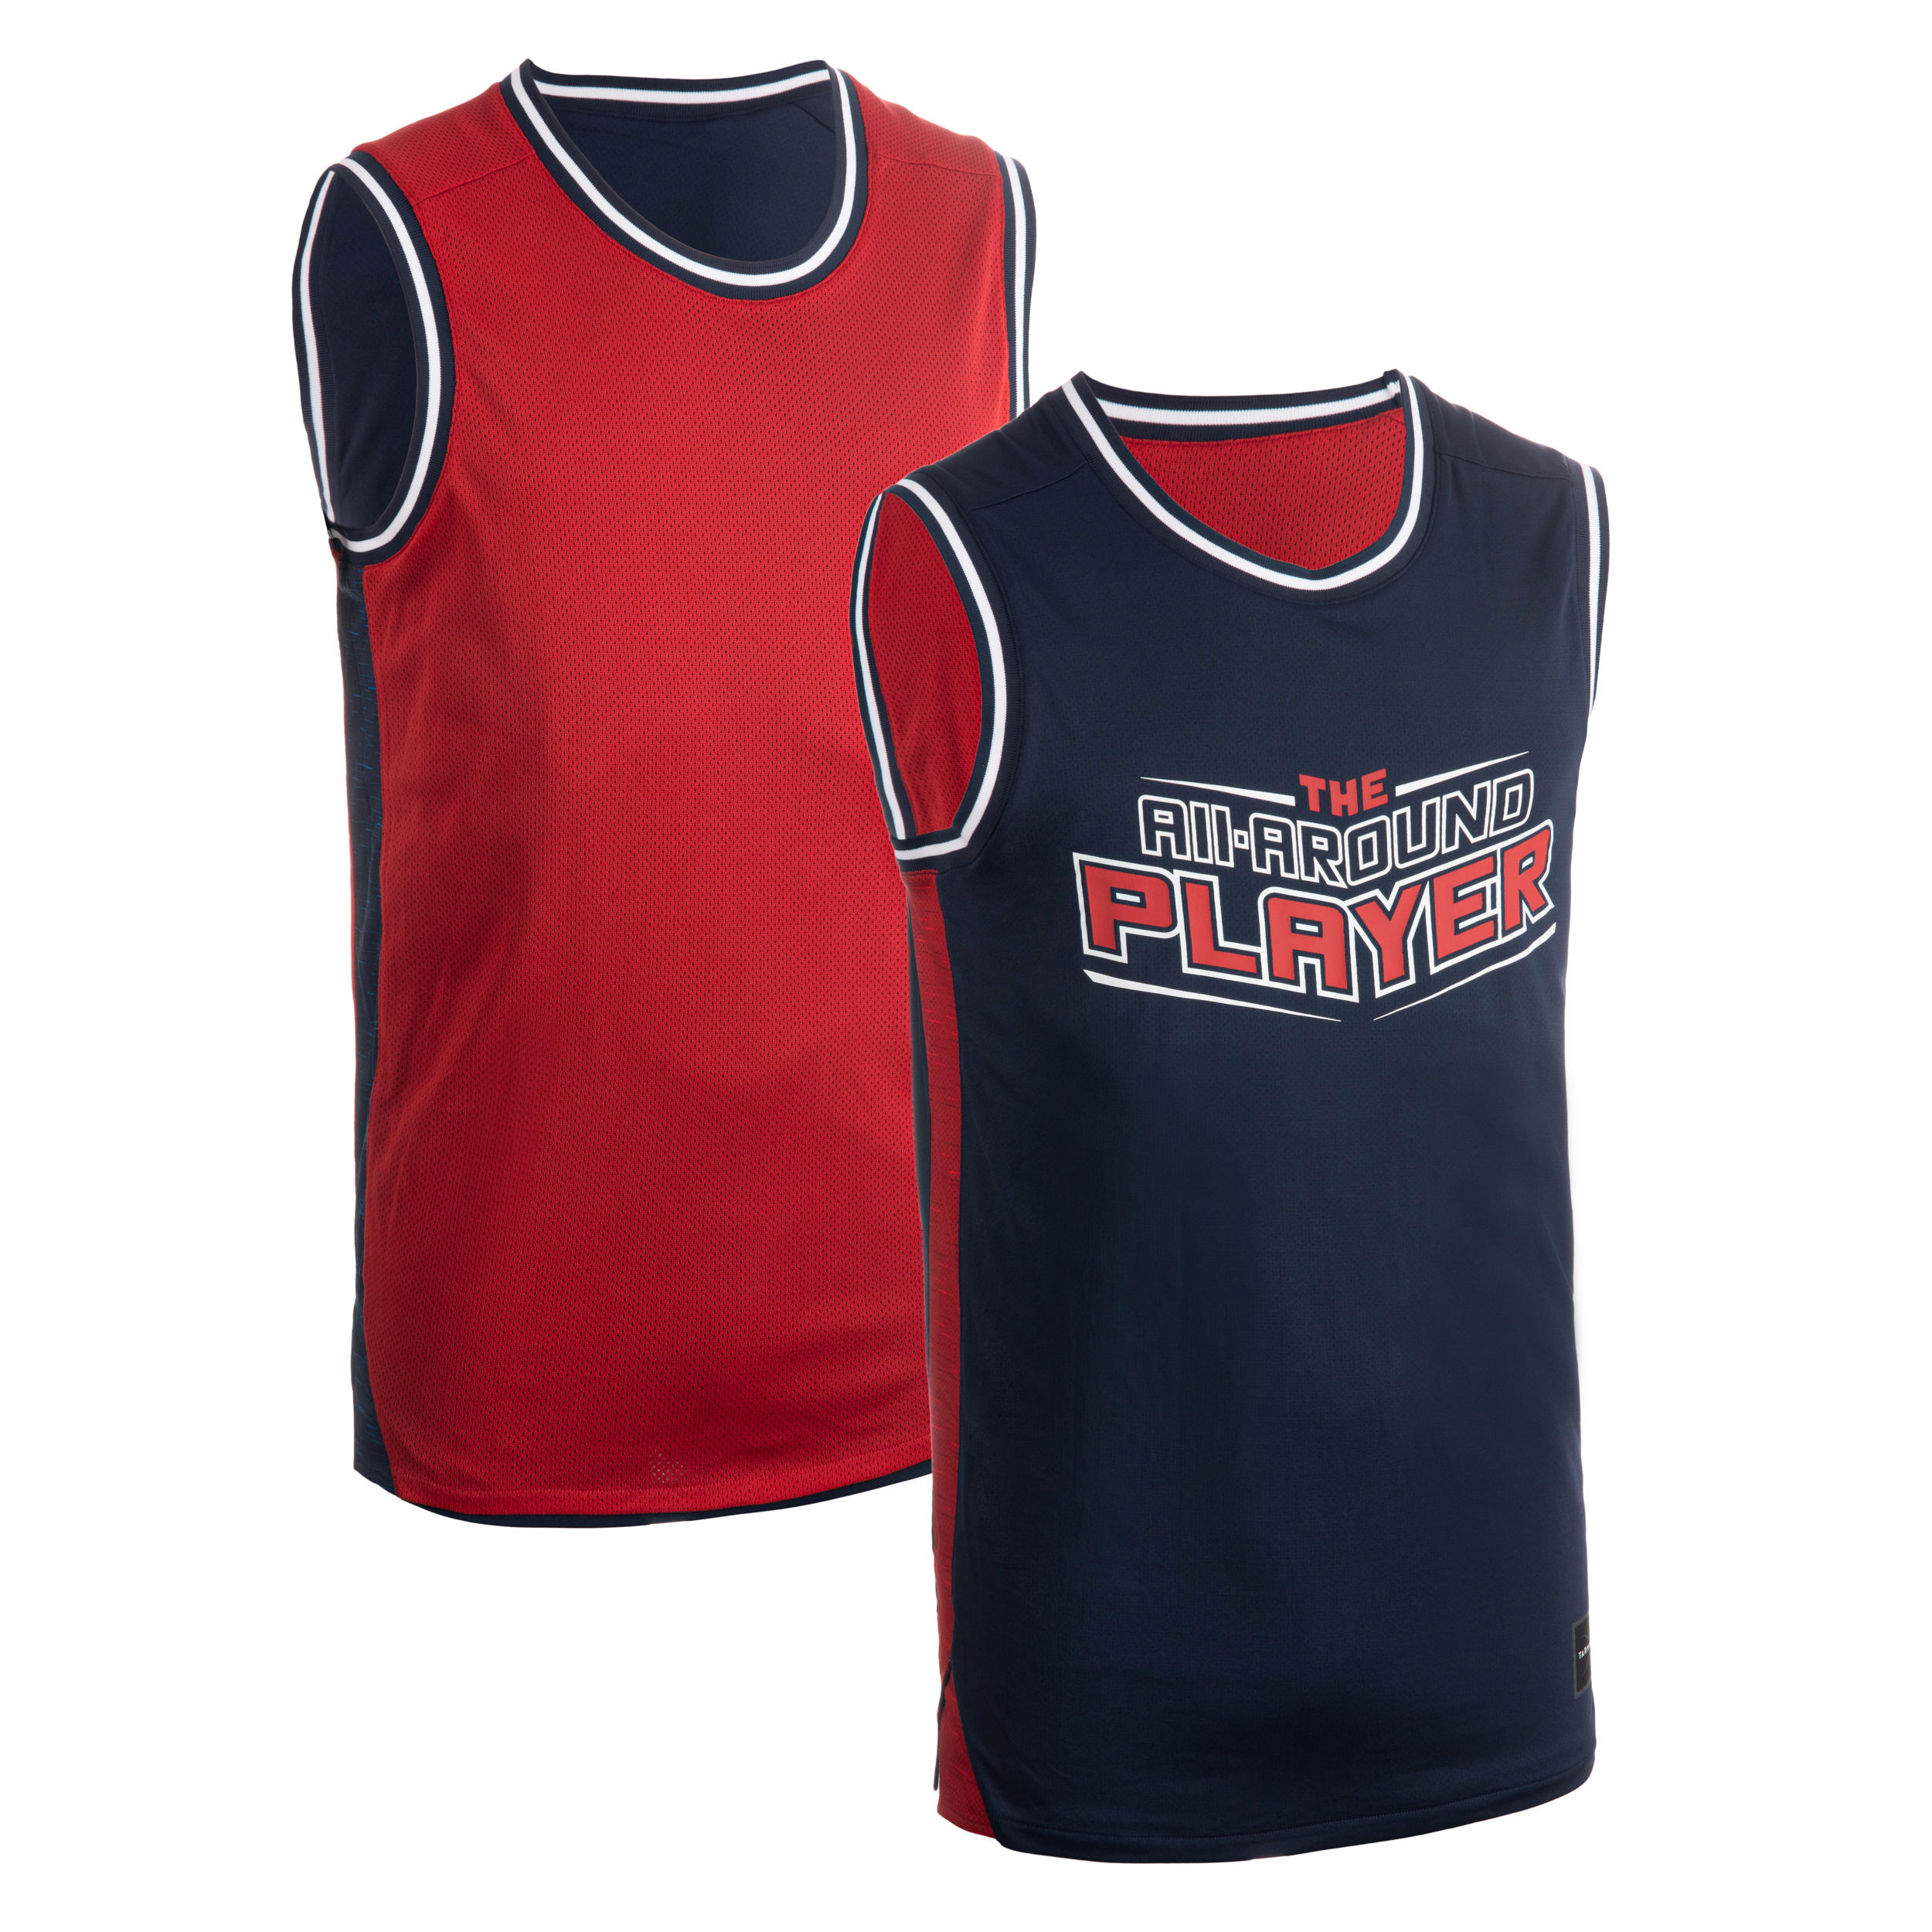 Details about   Hummel Basketball Mens Sports Training Core Sleeveless Jersey Shirt Top Red 